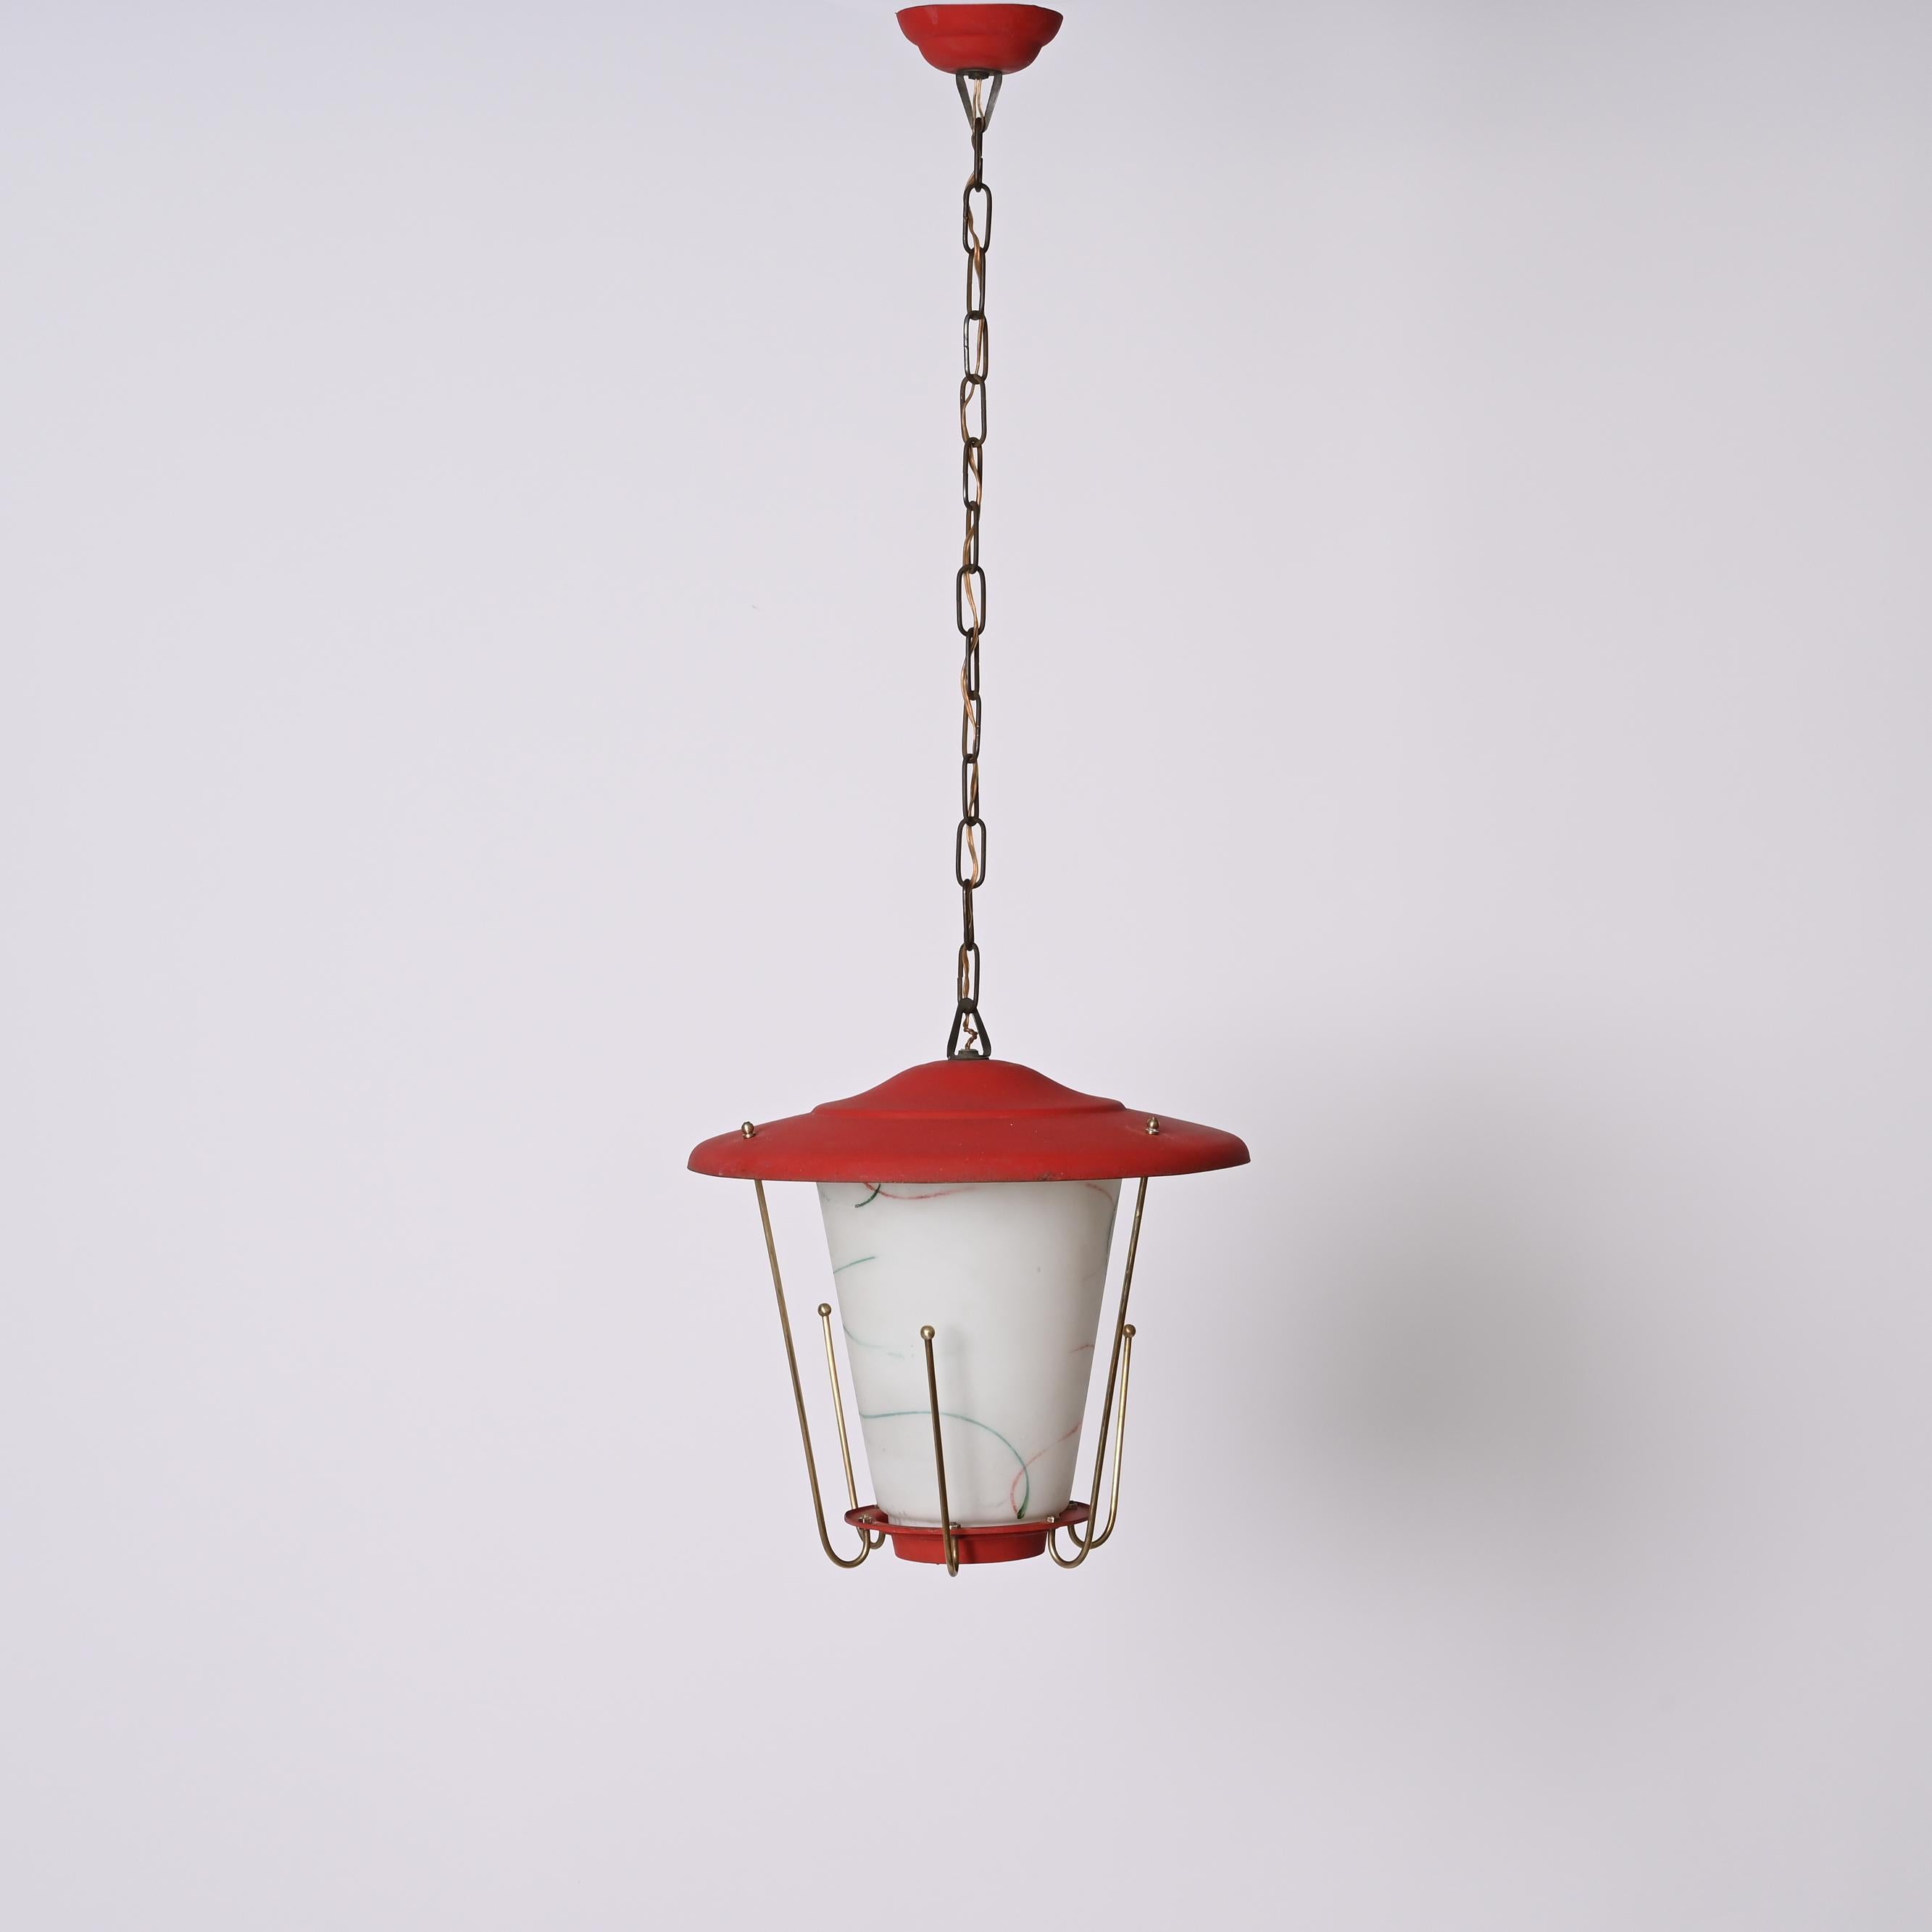 Midcentury Round Opaline Glass and Brass Italian Red Lantern Chandelier, 1950s For Sale 8